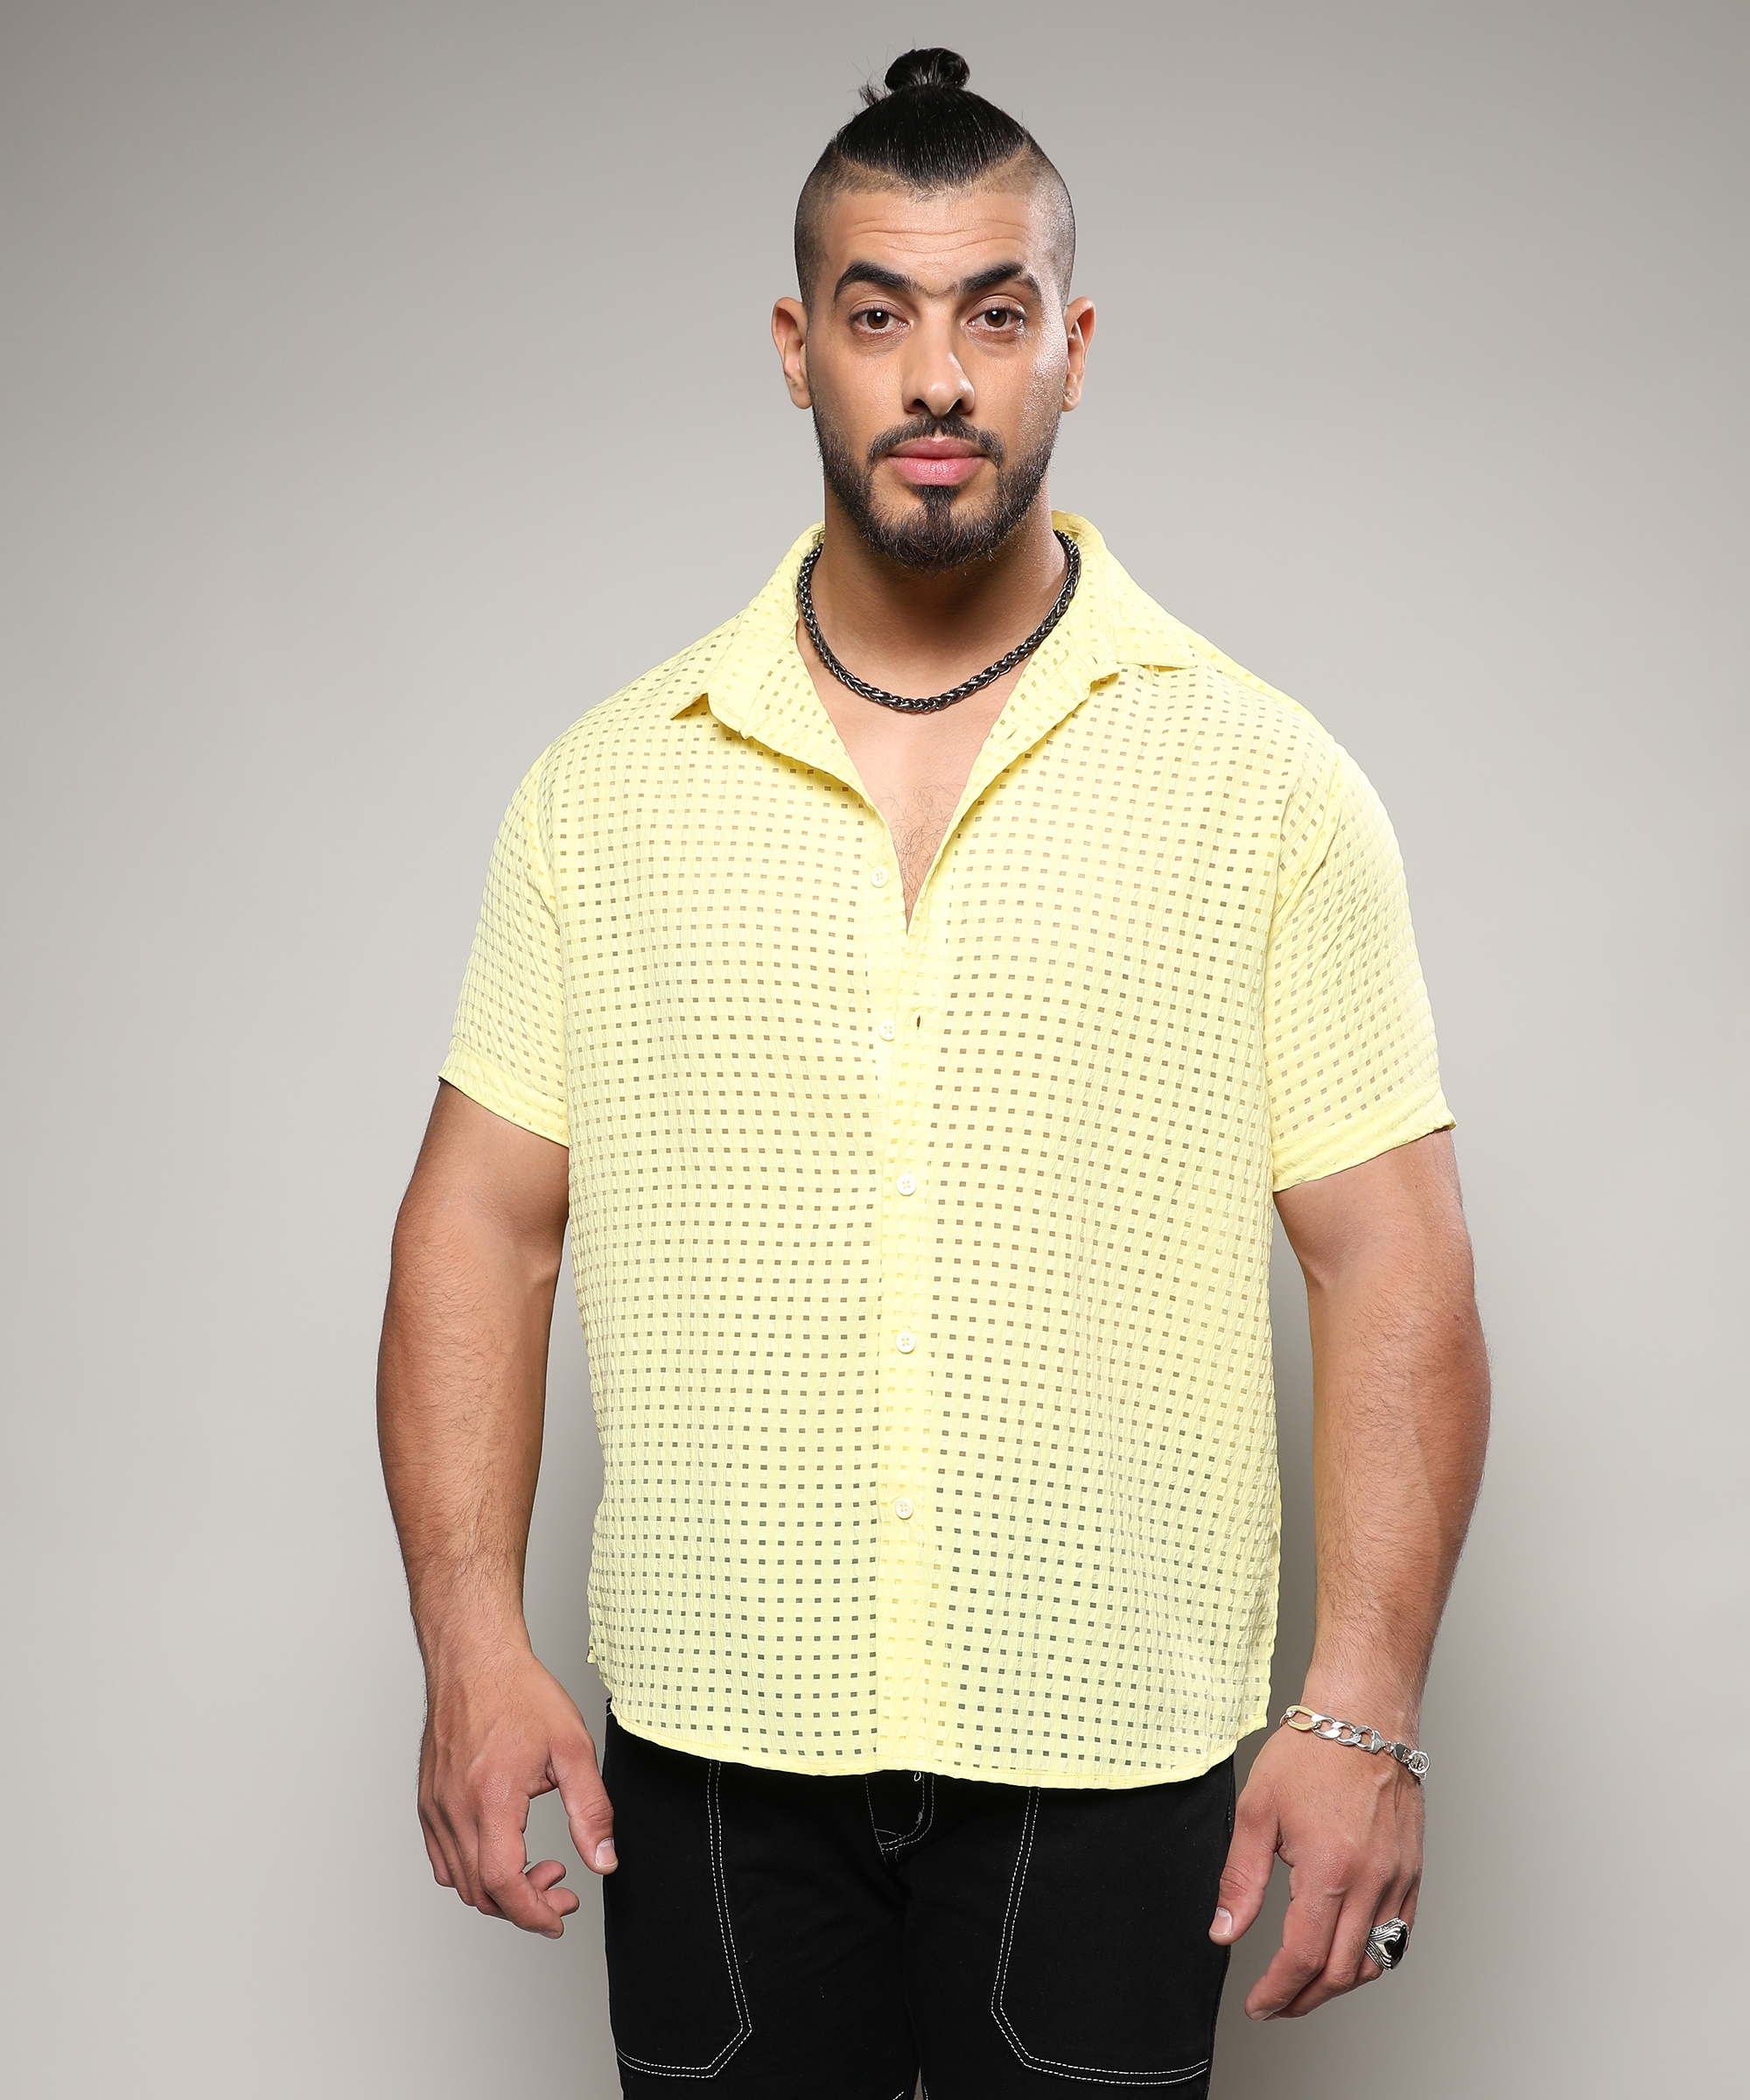 Instafab Plus | Men's Lemon Yellow See-Through Square Shirt